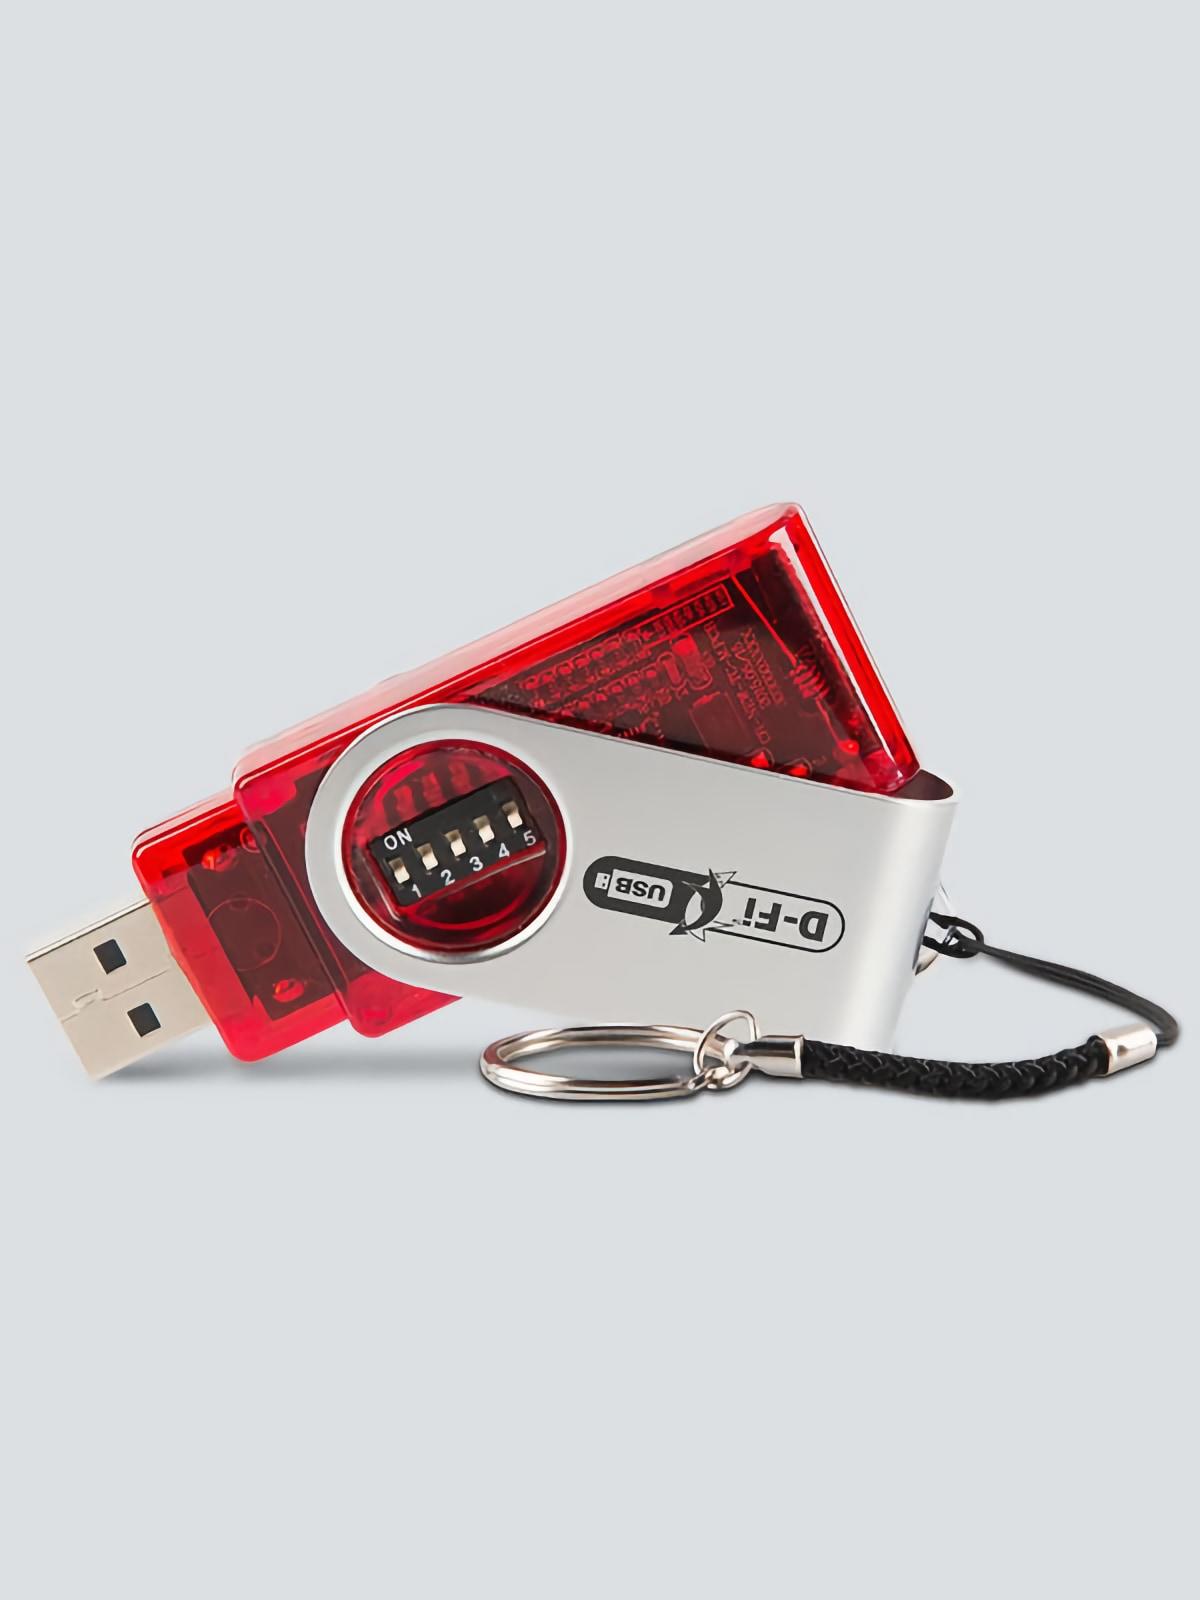 Chauvet DJ D-Fi USB horizontal